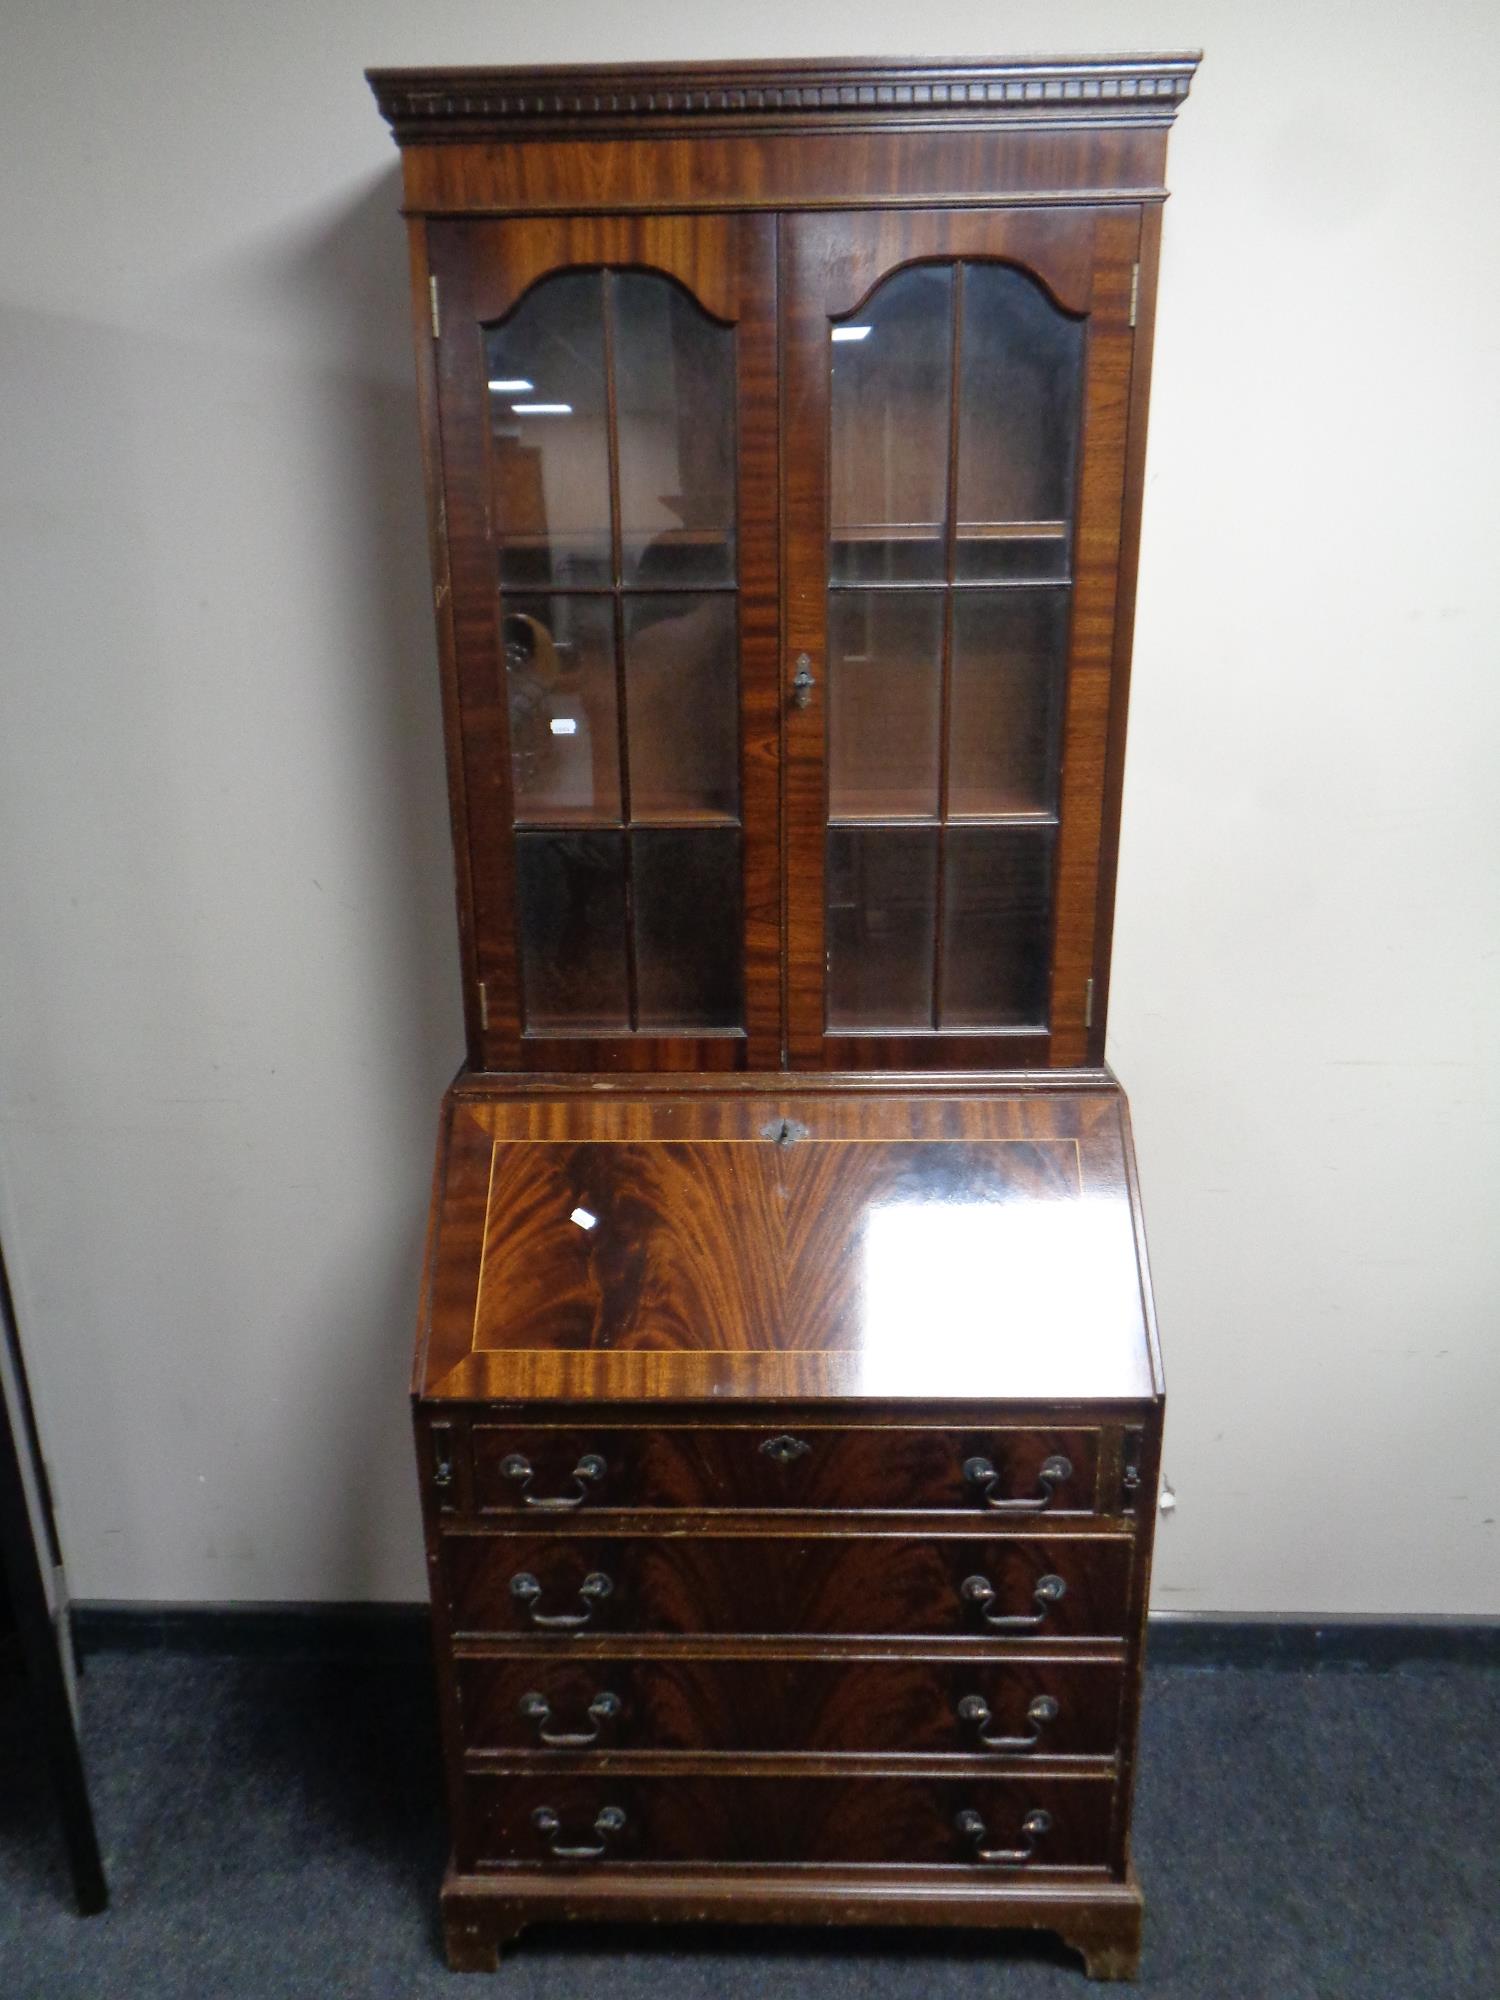 A reproduction inlaid mahogany bureau bookcase